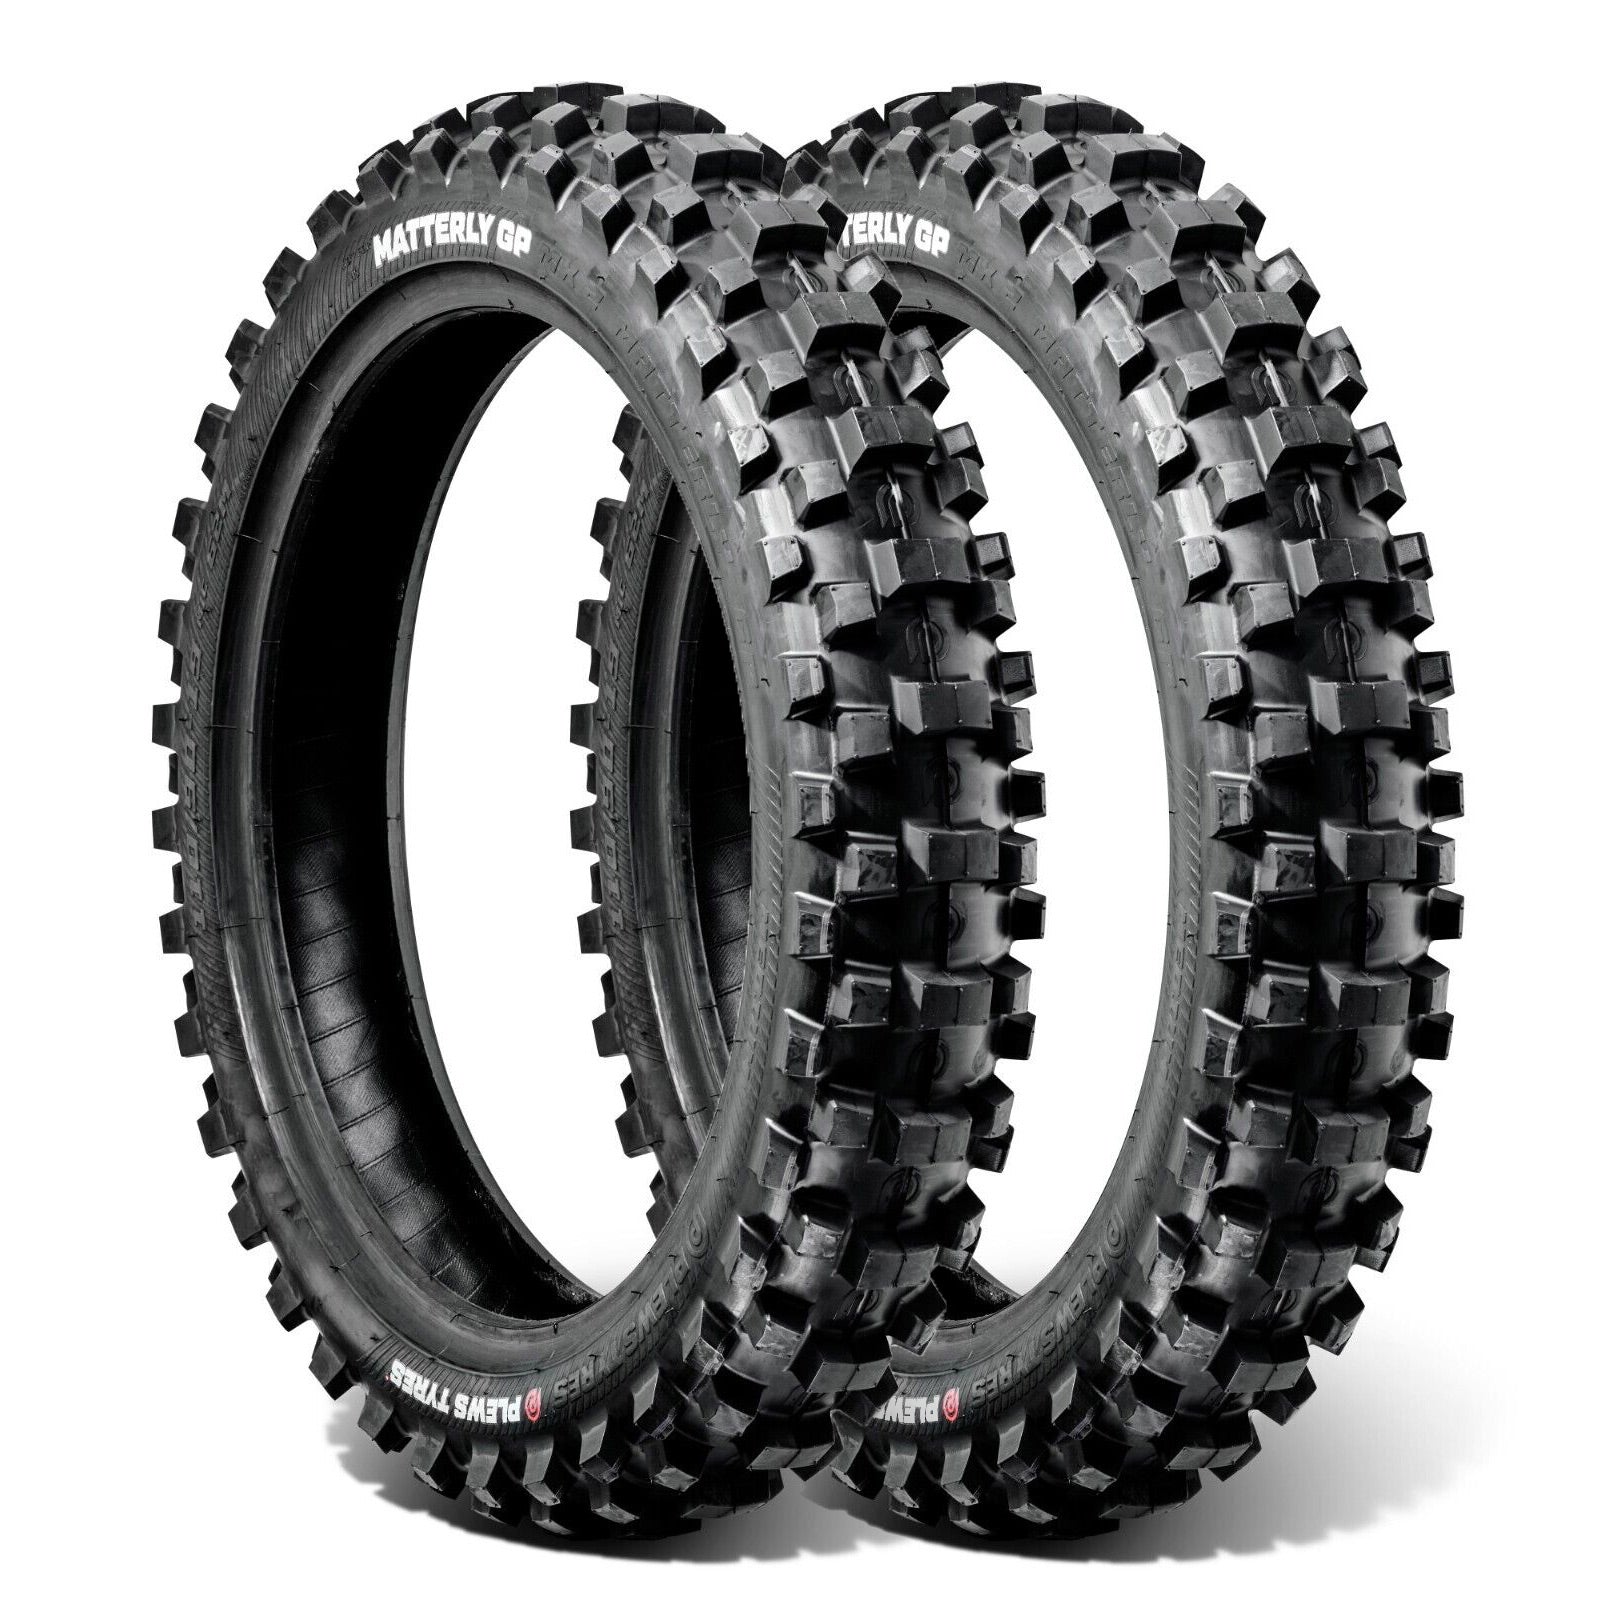 Plews Tyres | Intermediate Double Rear | Two MX2 MATTERLY GP Rear Motocross Tire Bundle - 3/4 view